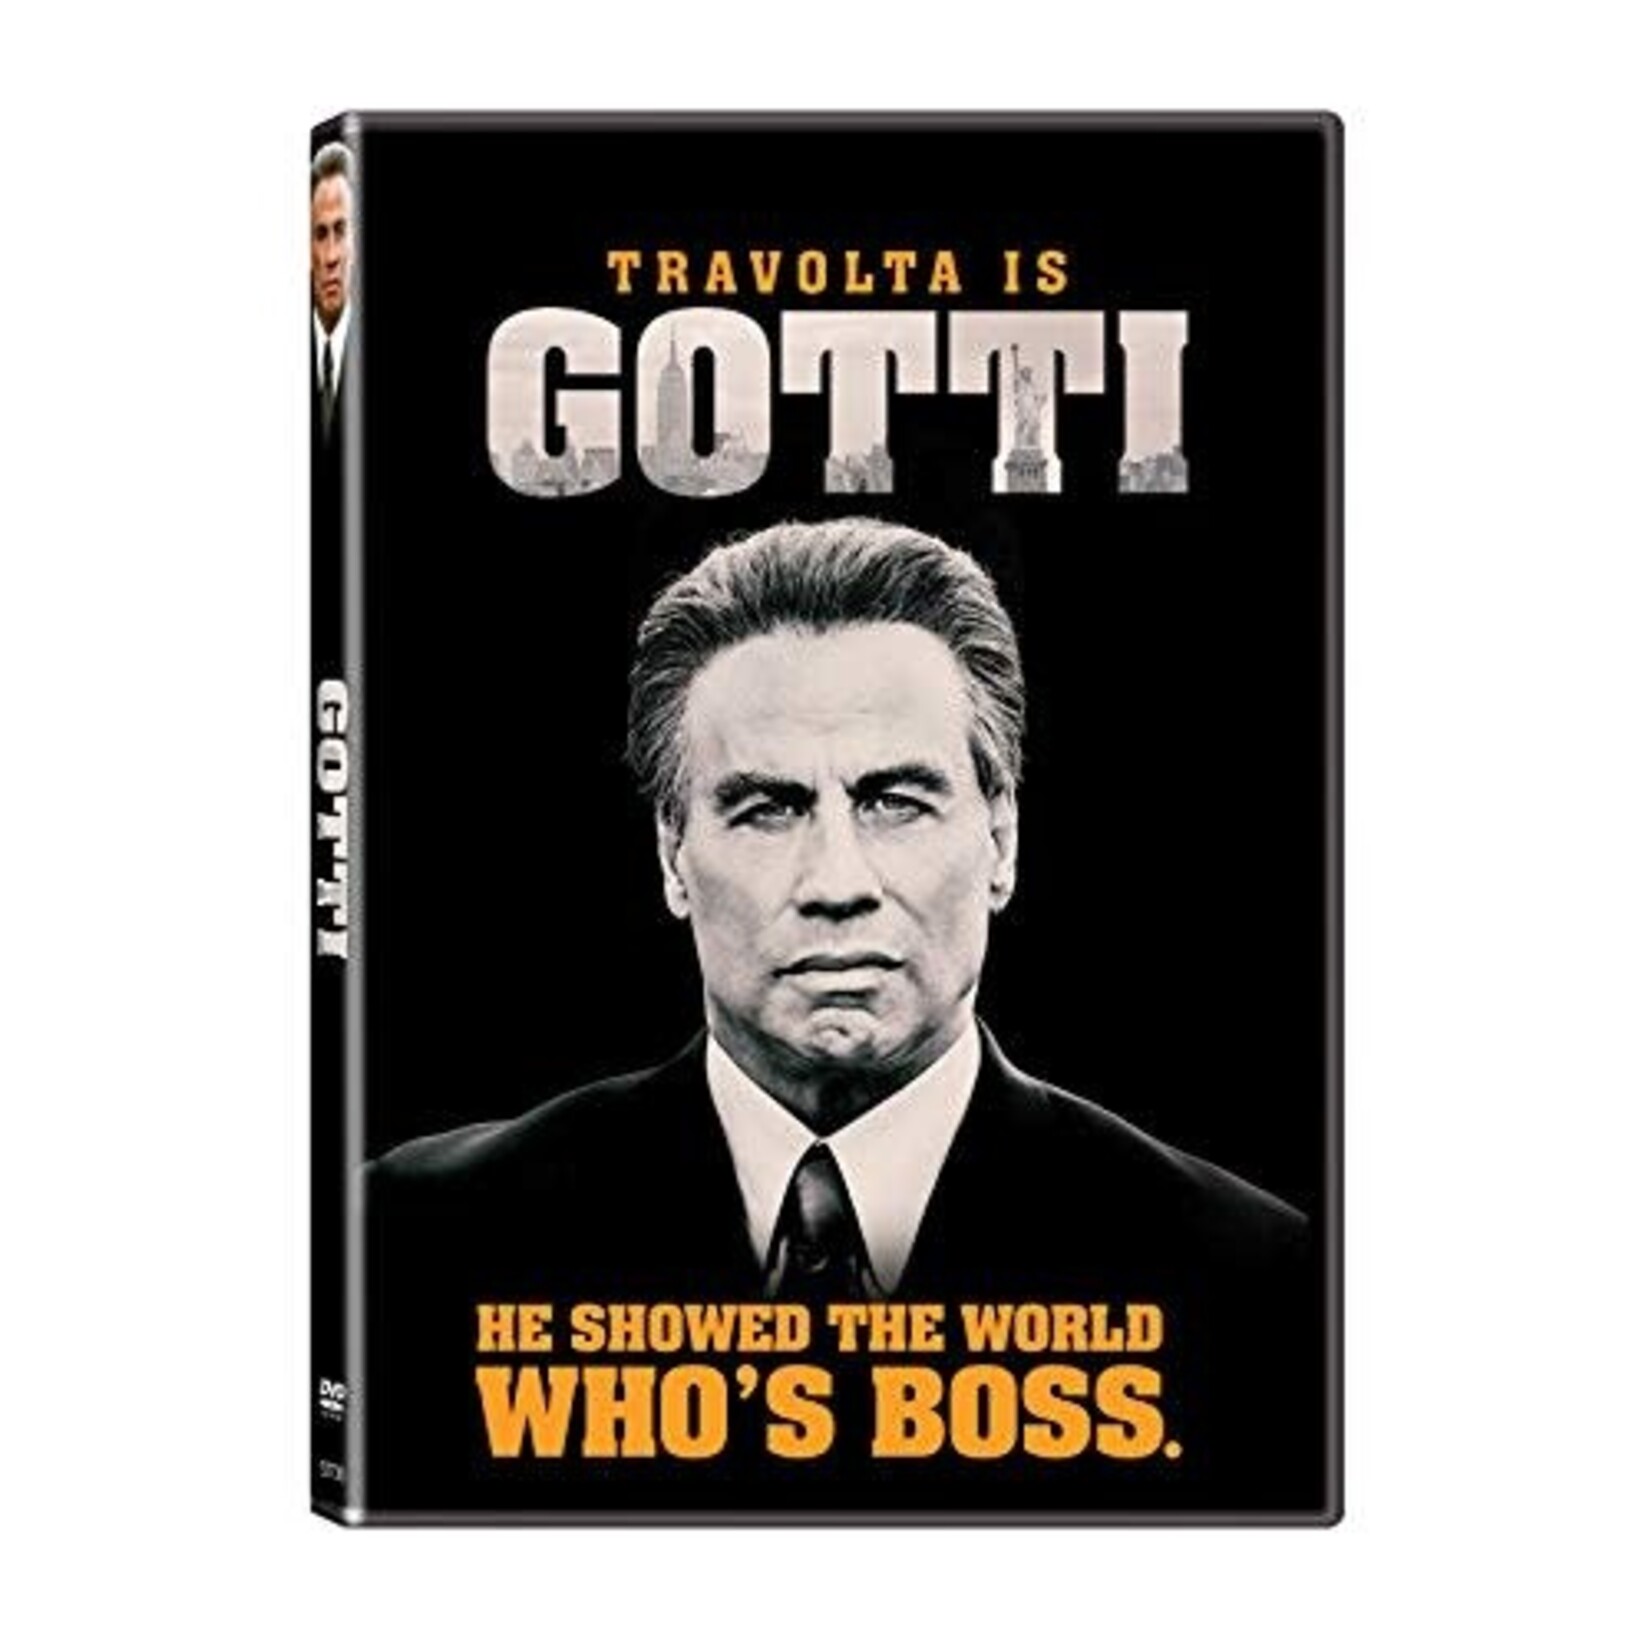 Gotti (2018) [USED DVD]